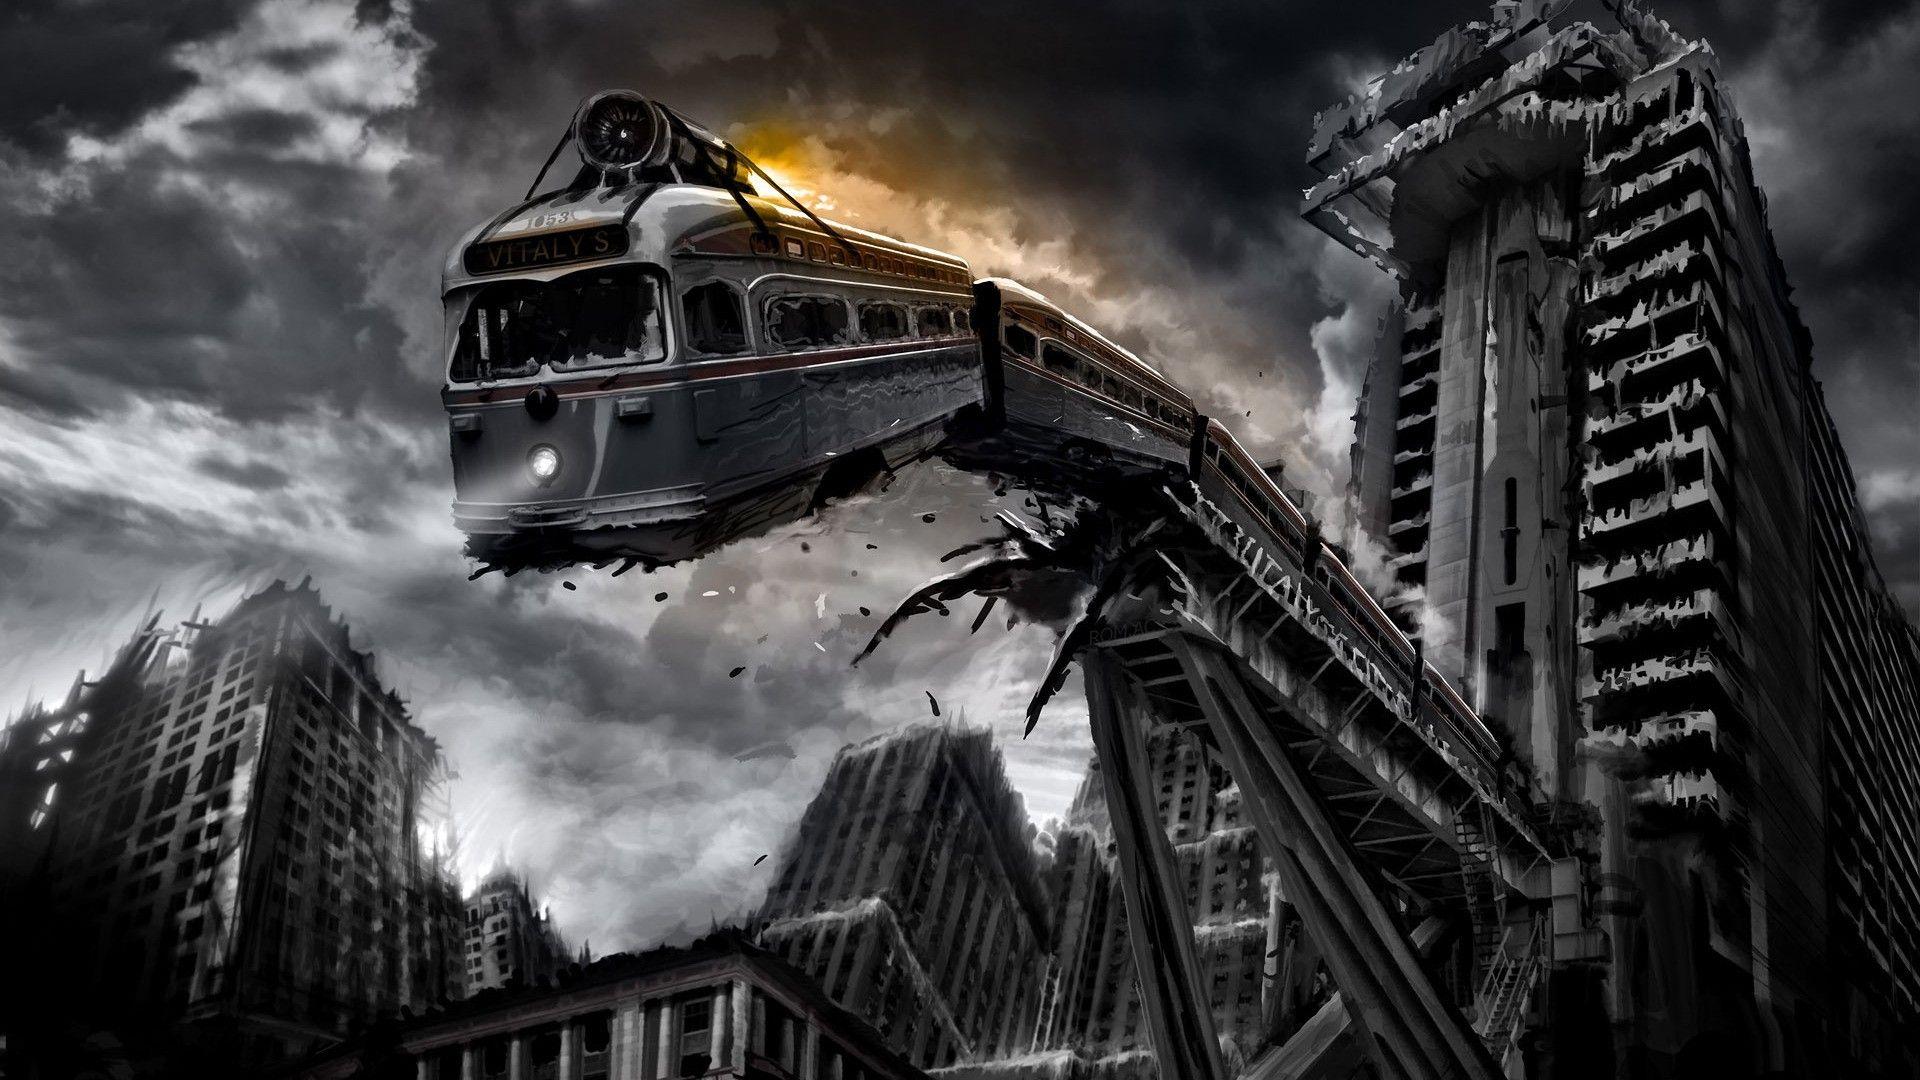 trains, urban, disasters, Romantically Apocalyptic, Vitaly S Alexius